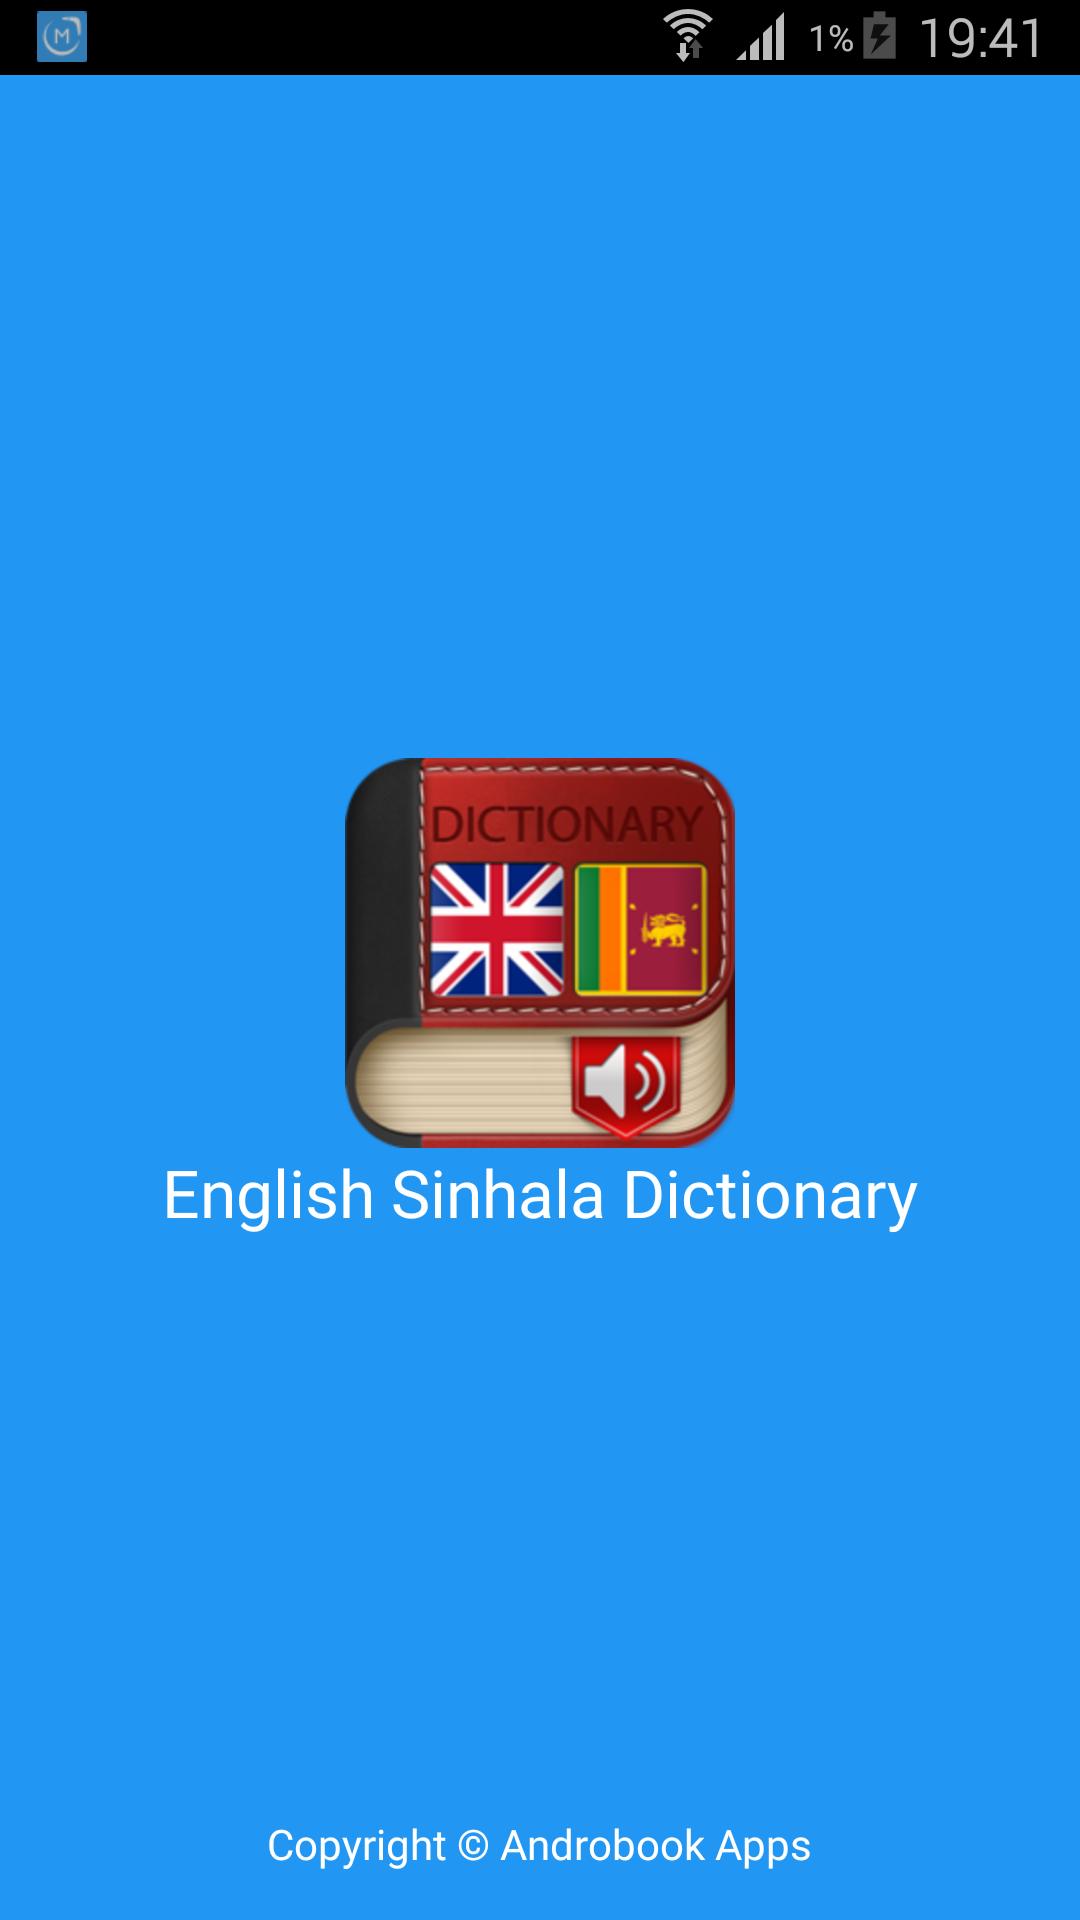 English to sinhala dictionary free